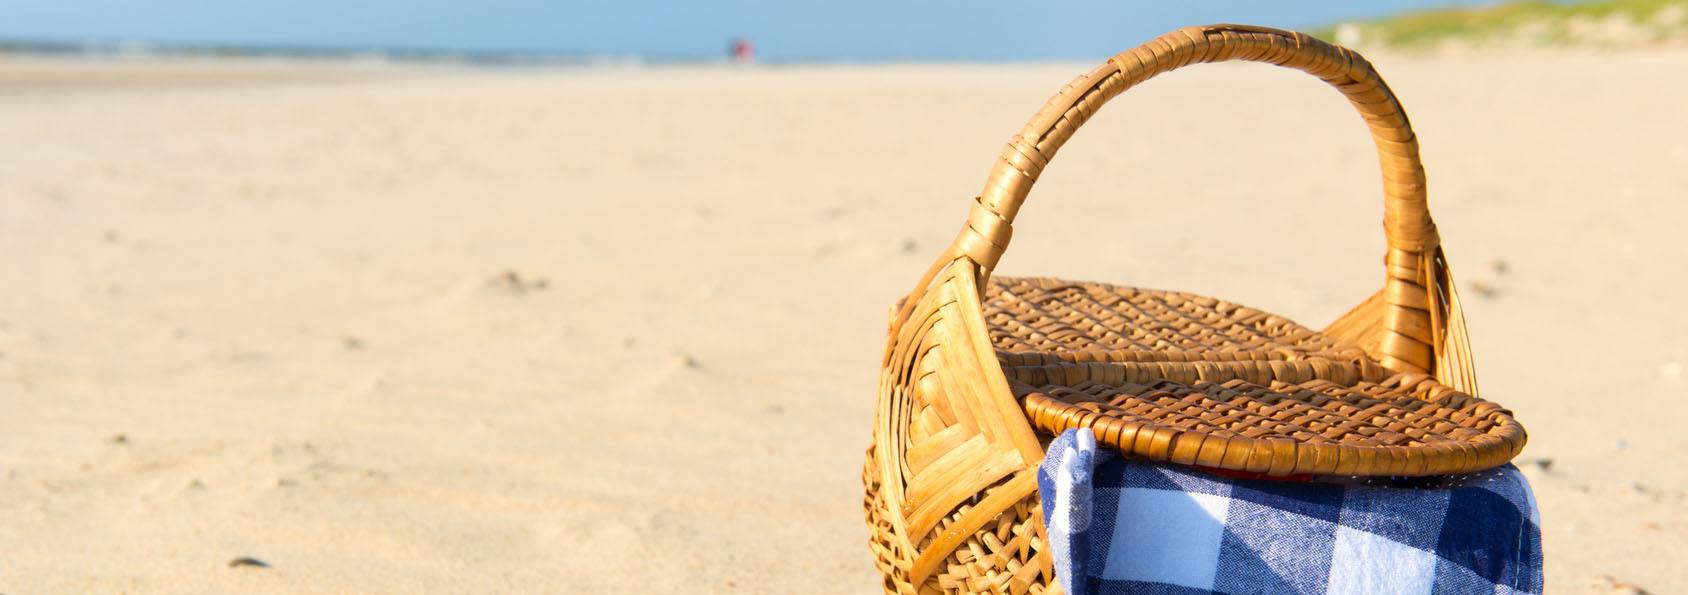 A picnic basket on the beach sand